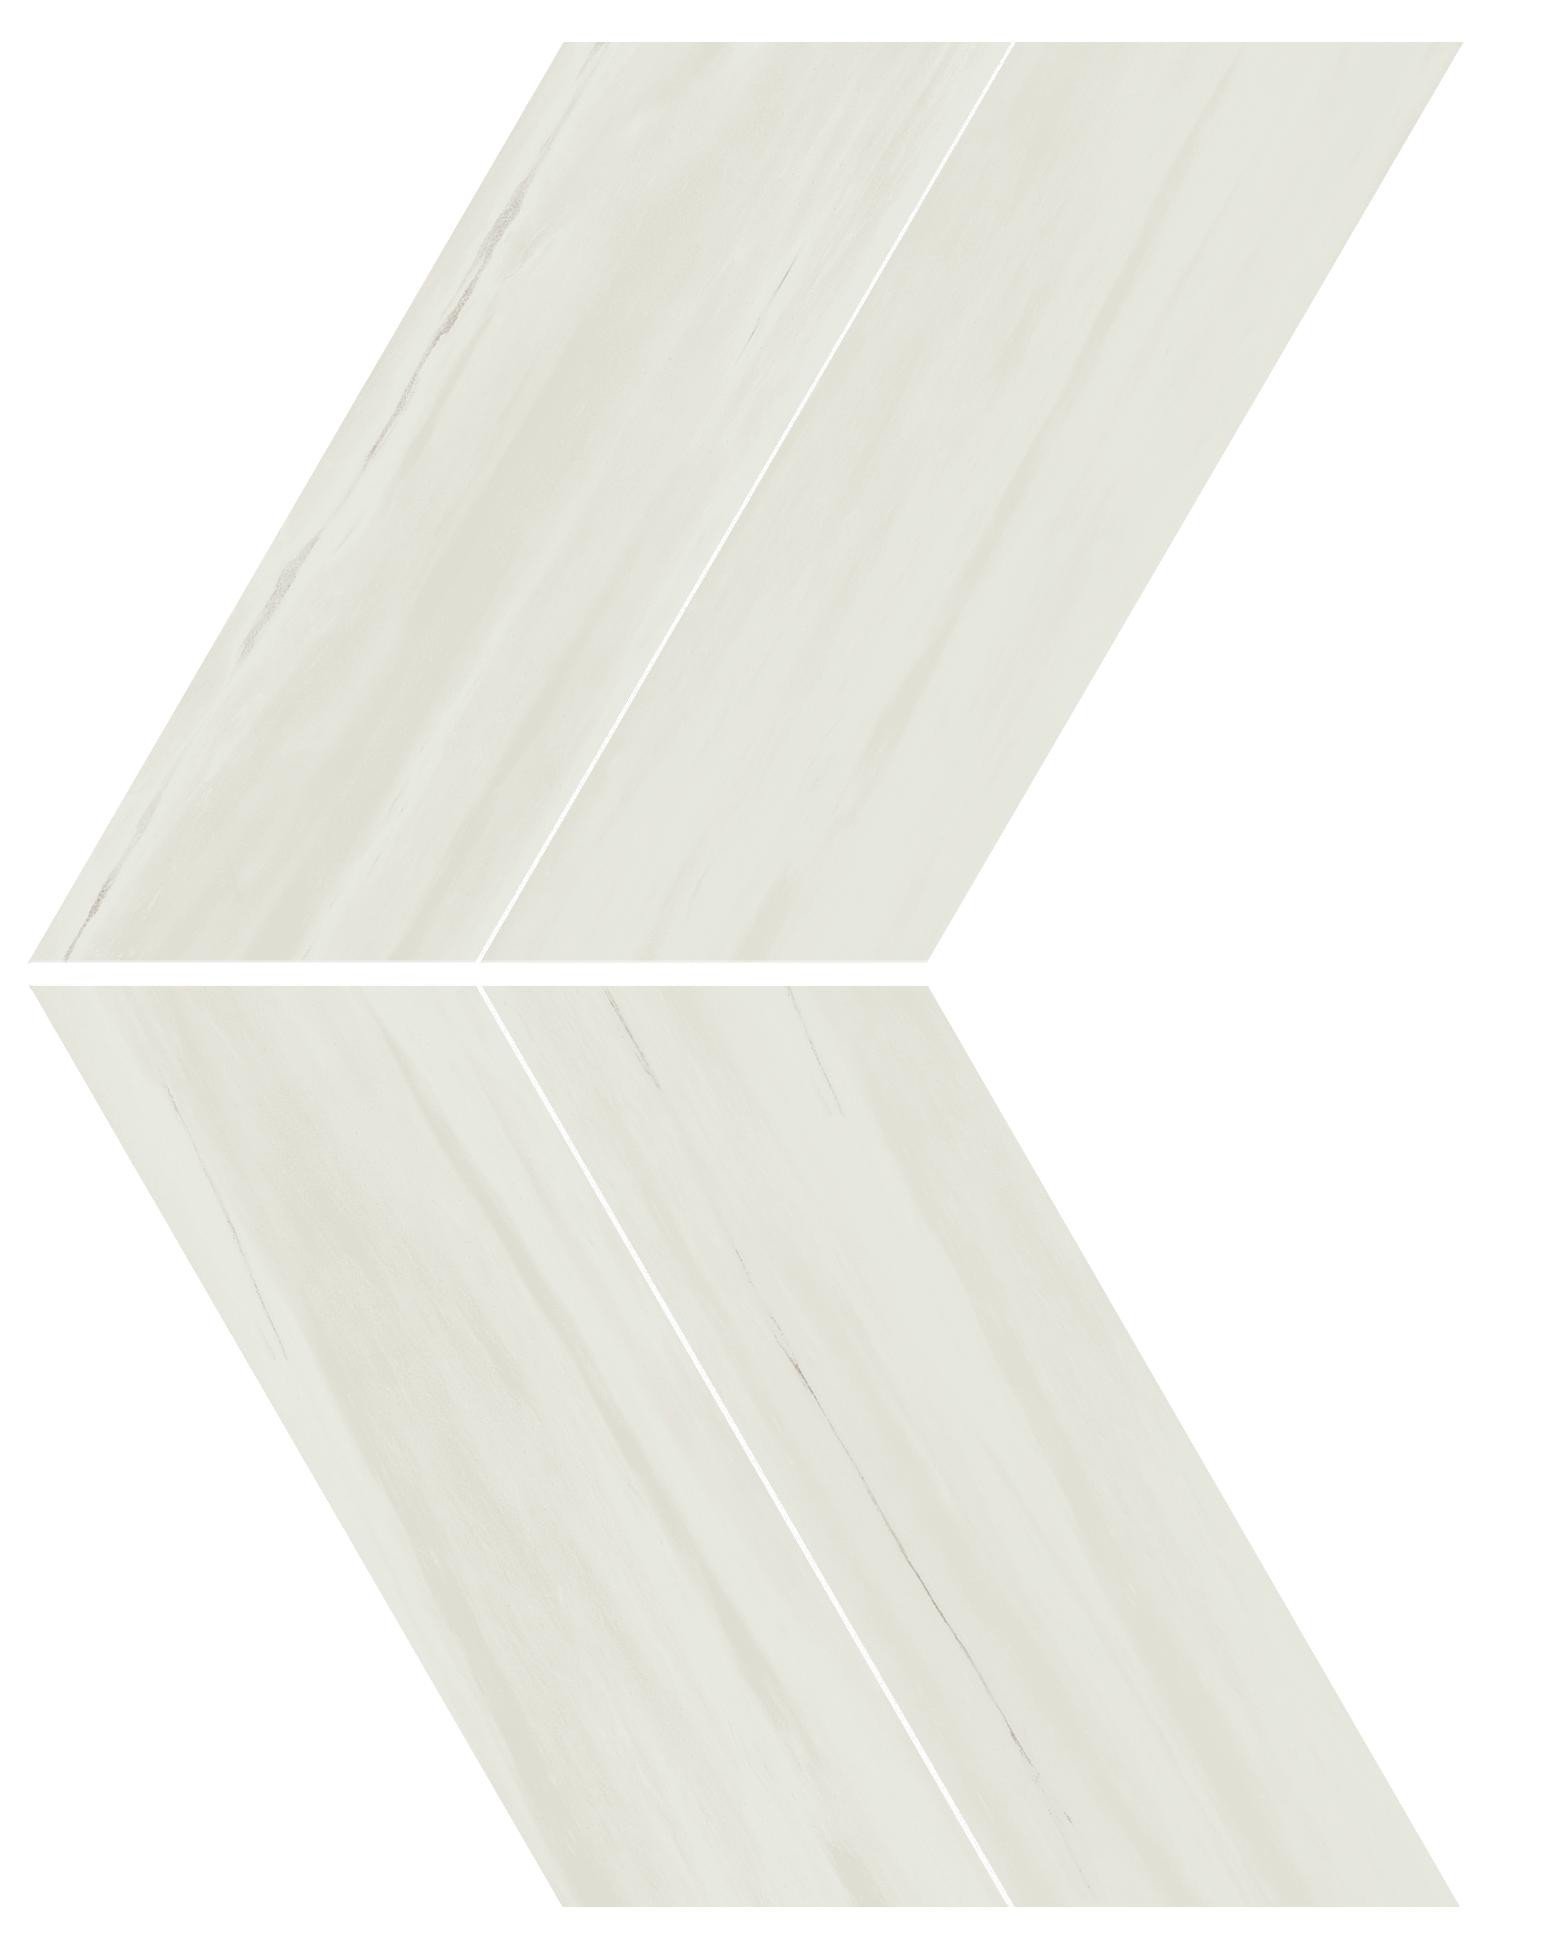 Декоративные элементы Atlas Concorde Italy Marvel Bianco Dolomite Chevron Lappato AS1Q, цвет белый, поверхность лаппатированная, шеврон, 225x229